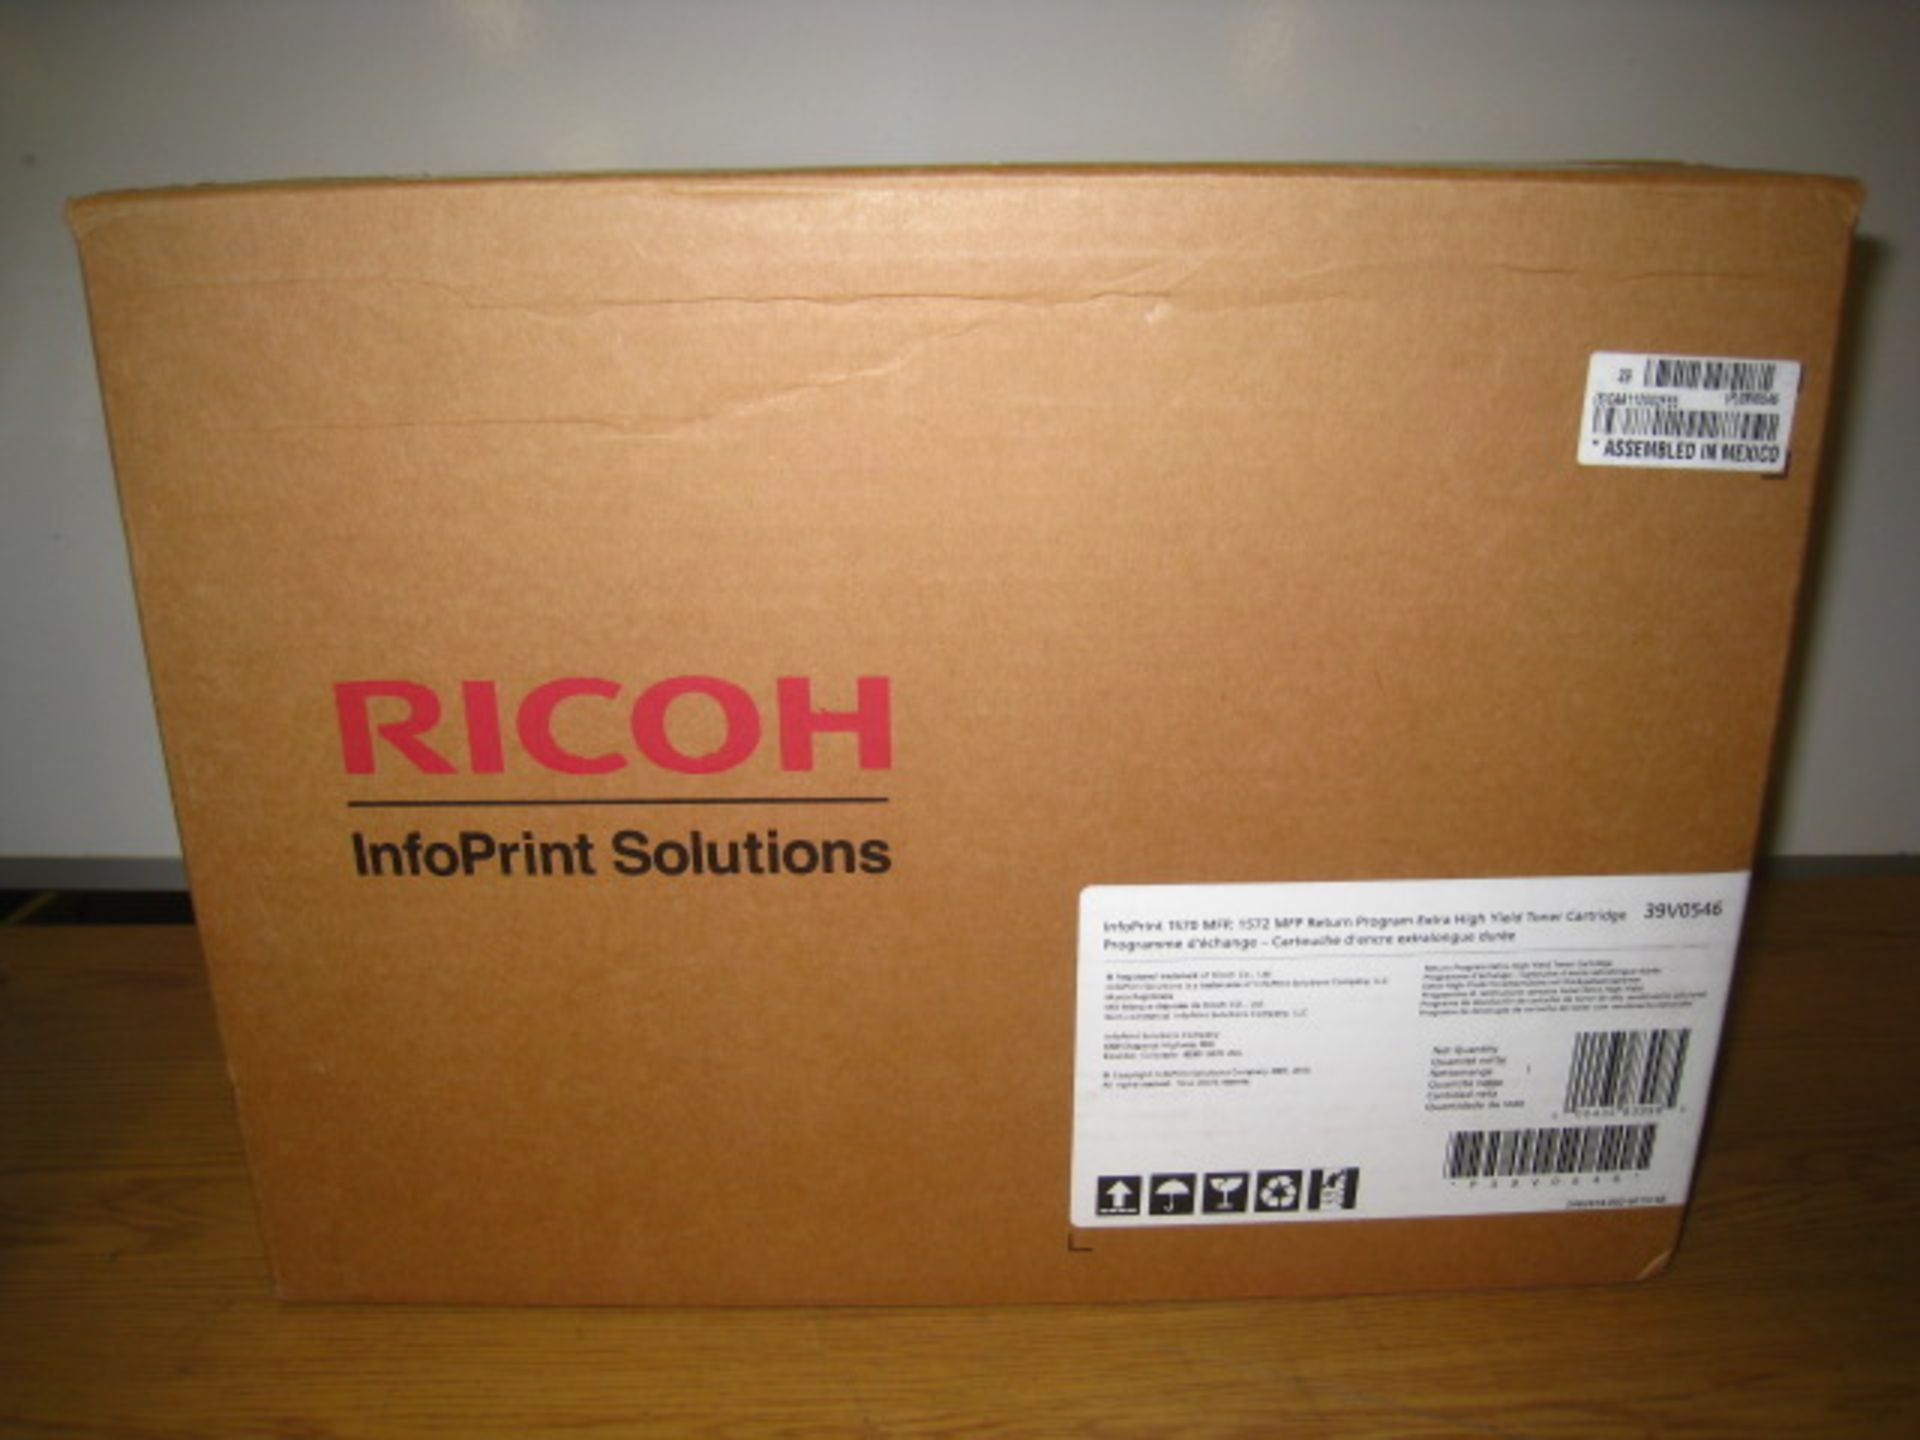 RICOH Toner 39V0546 black for Infoprint 1570 1572 extra high yield